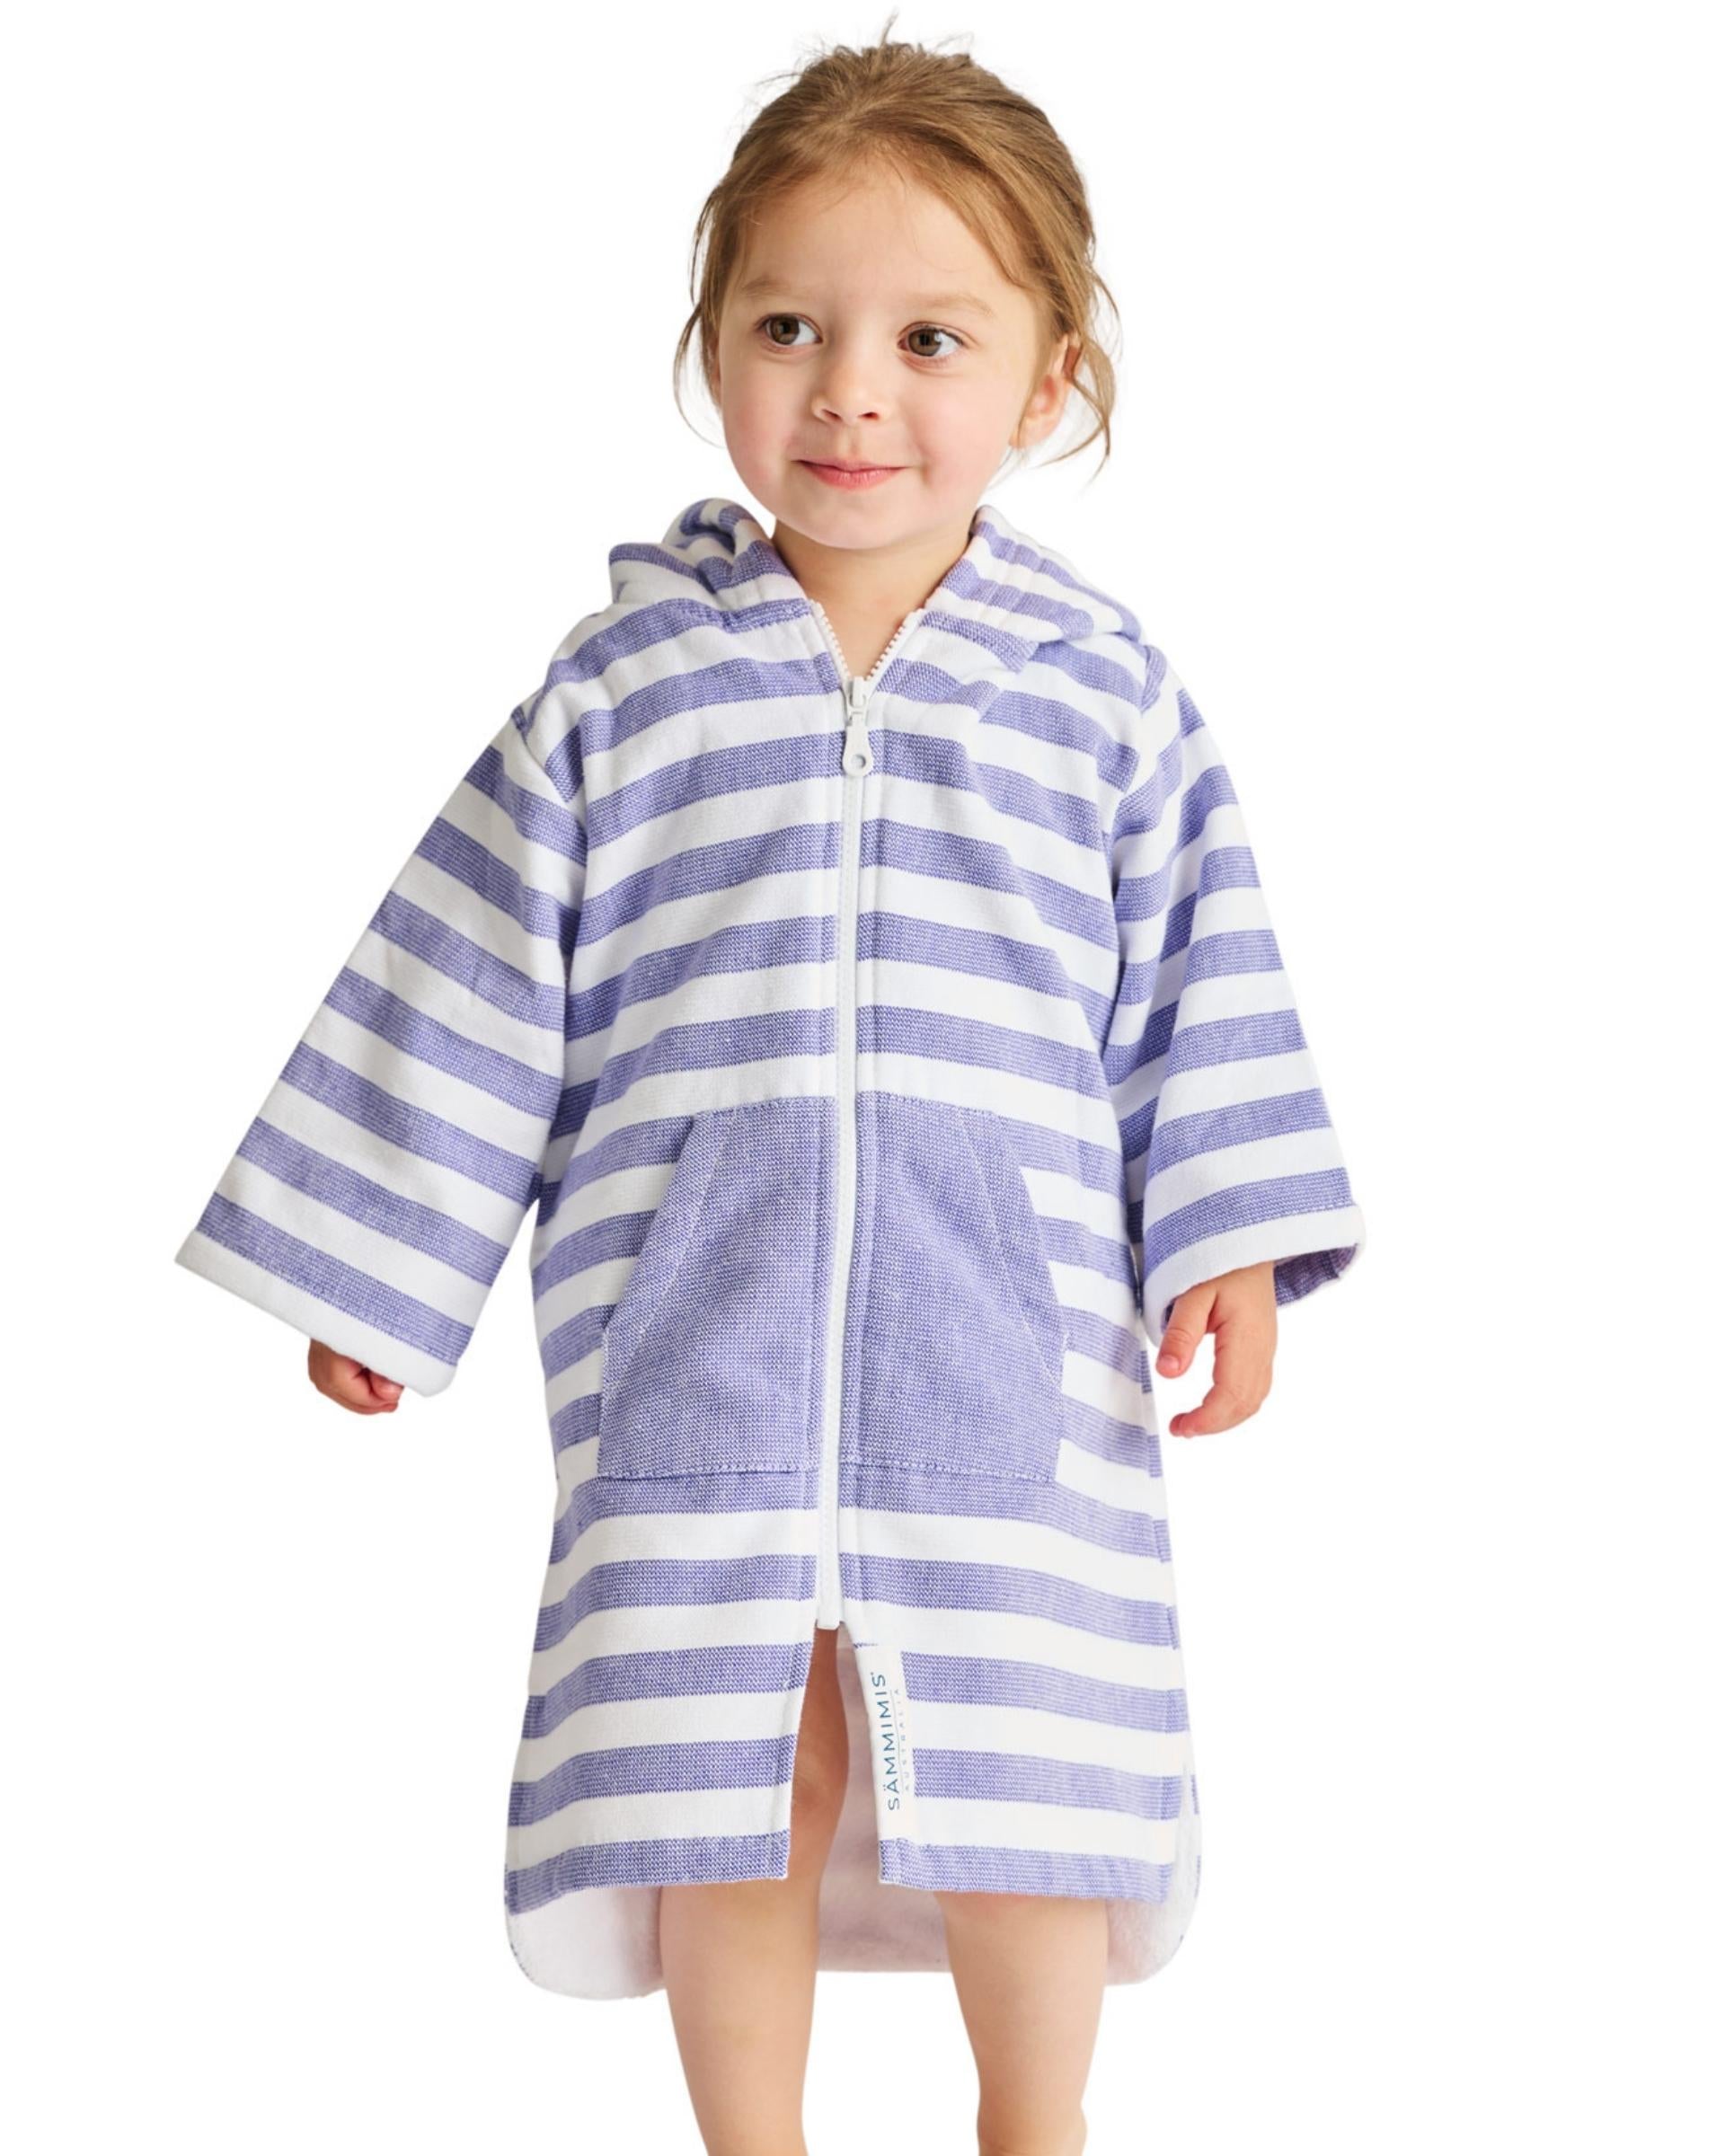 MENORCA Baby Terry Hooded Towel: Purple/White